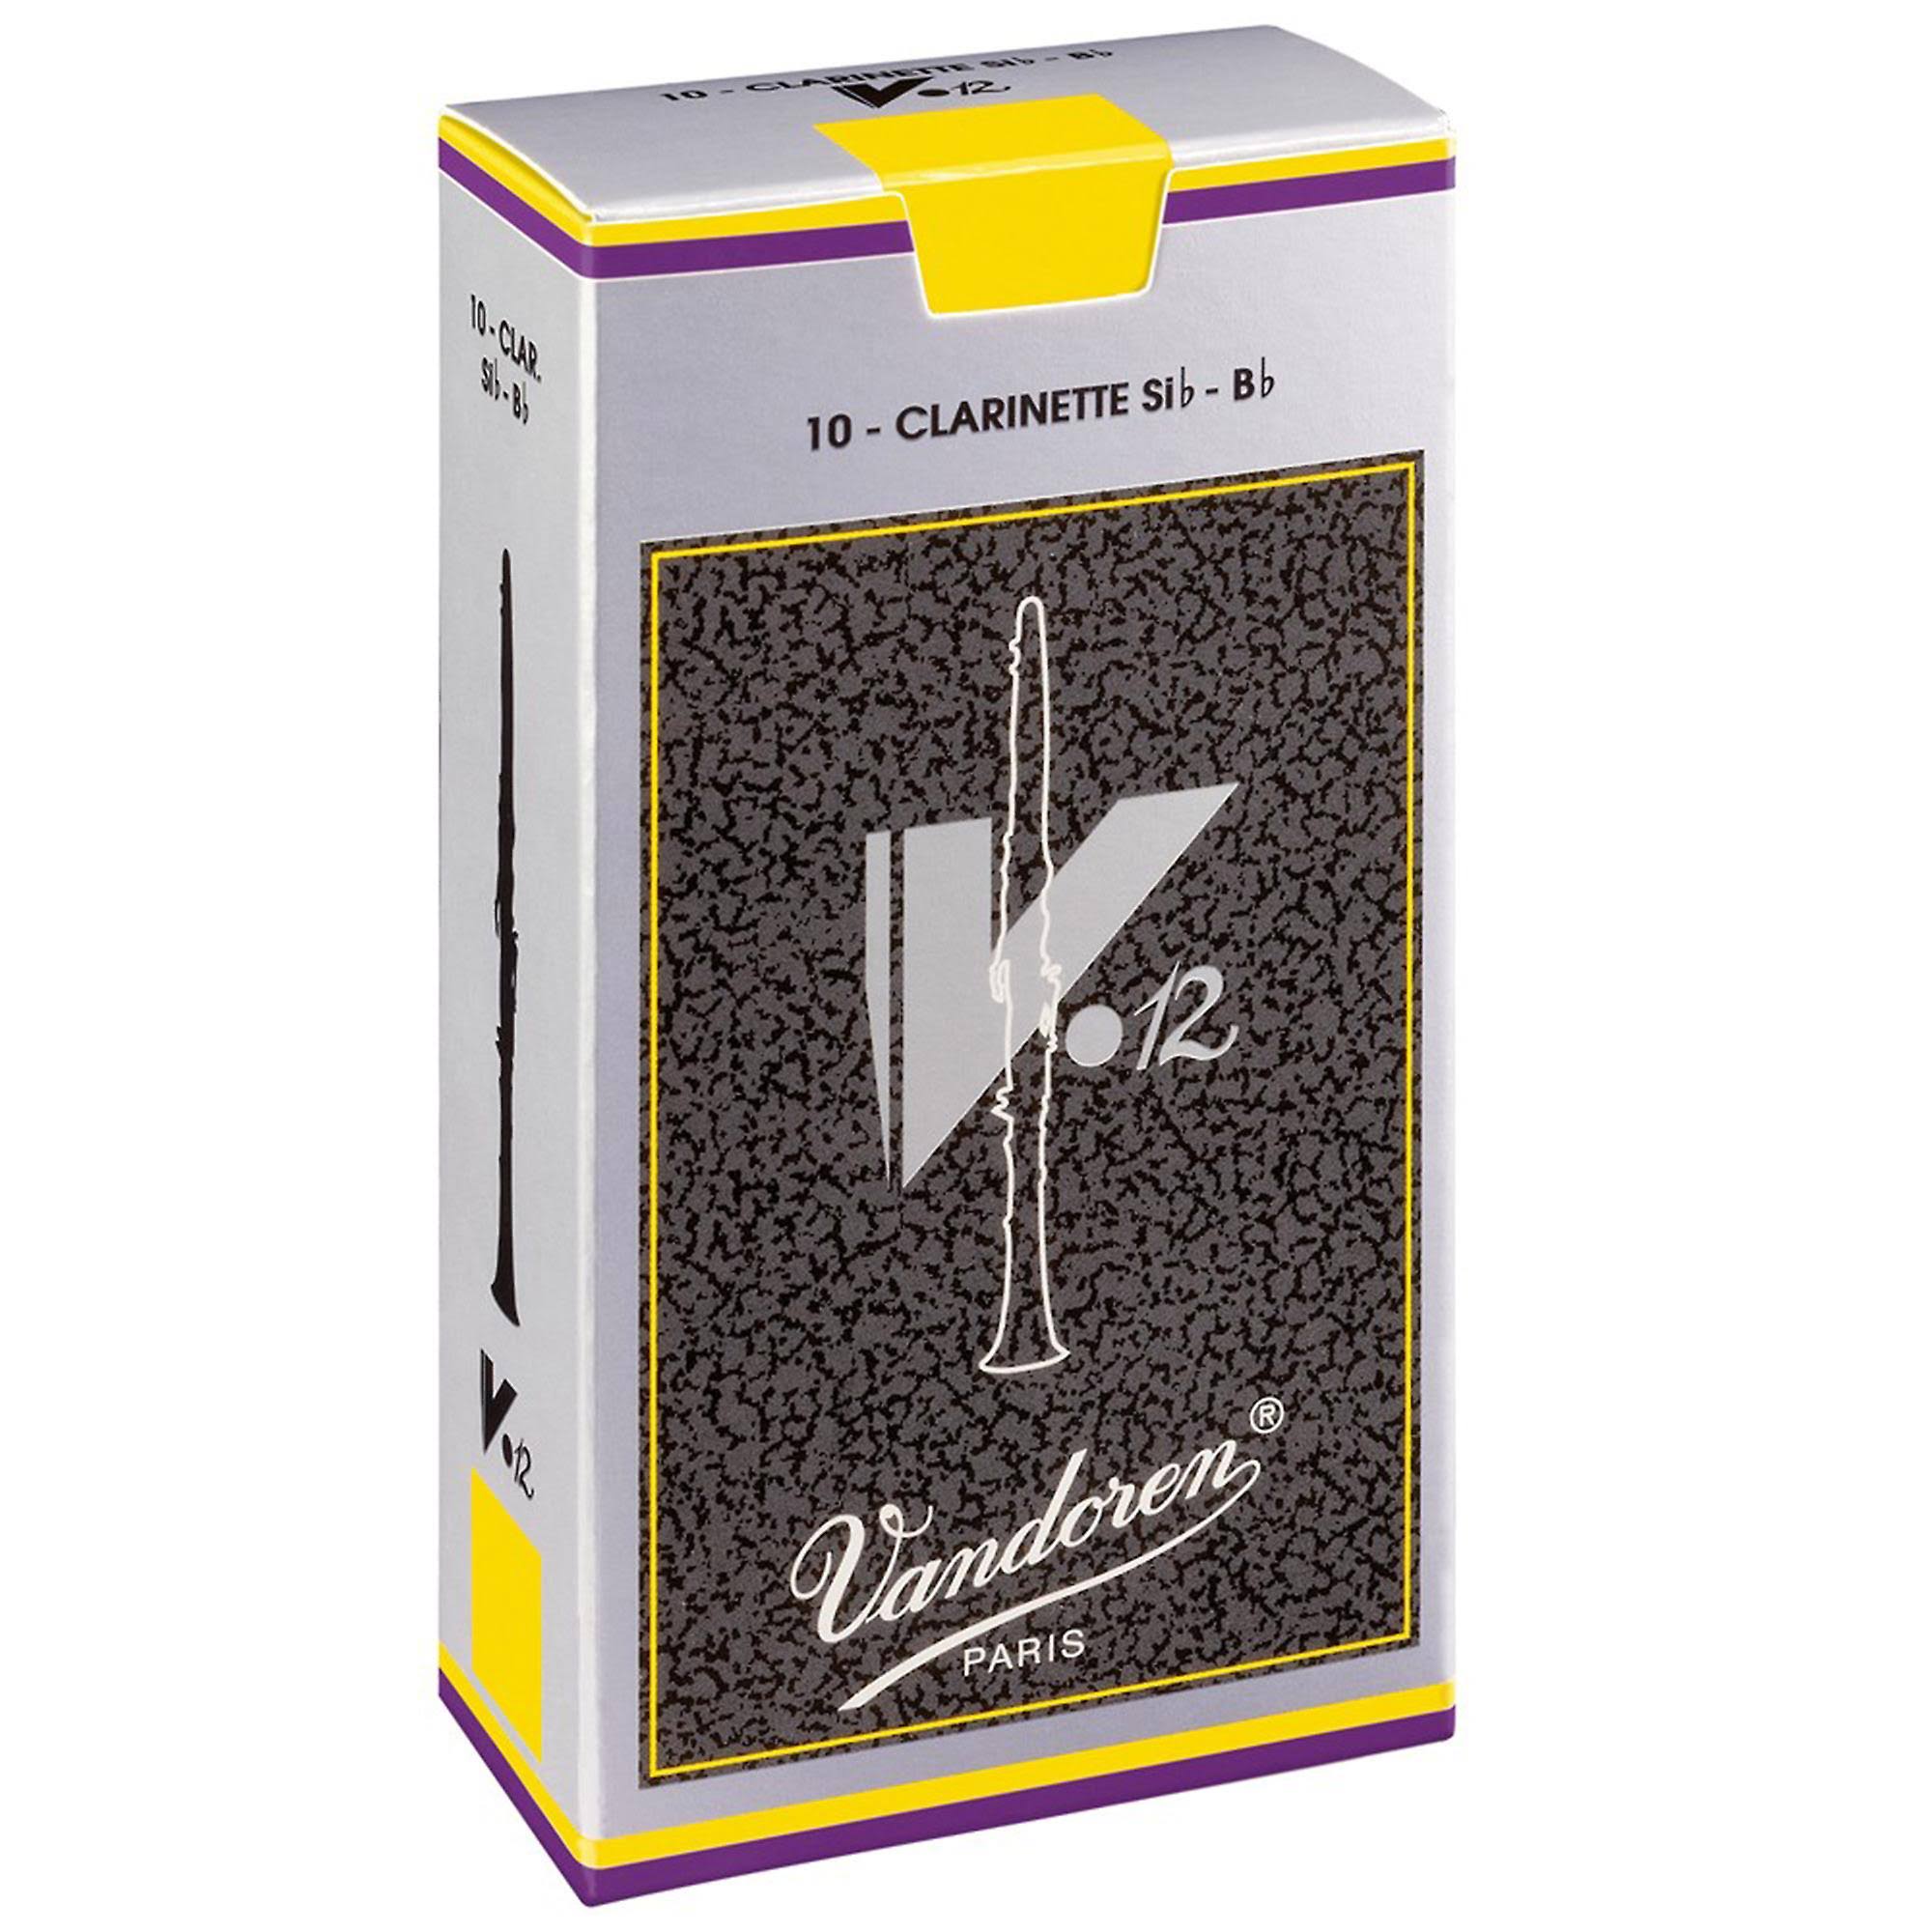 Vandoren CR1925 Bb Clarinet V.12 Reeds - Strength 2.5, Box of 10